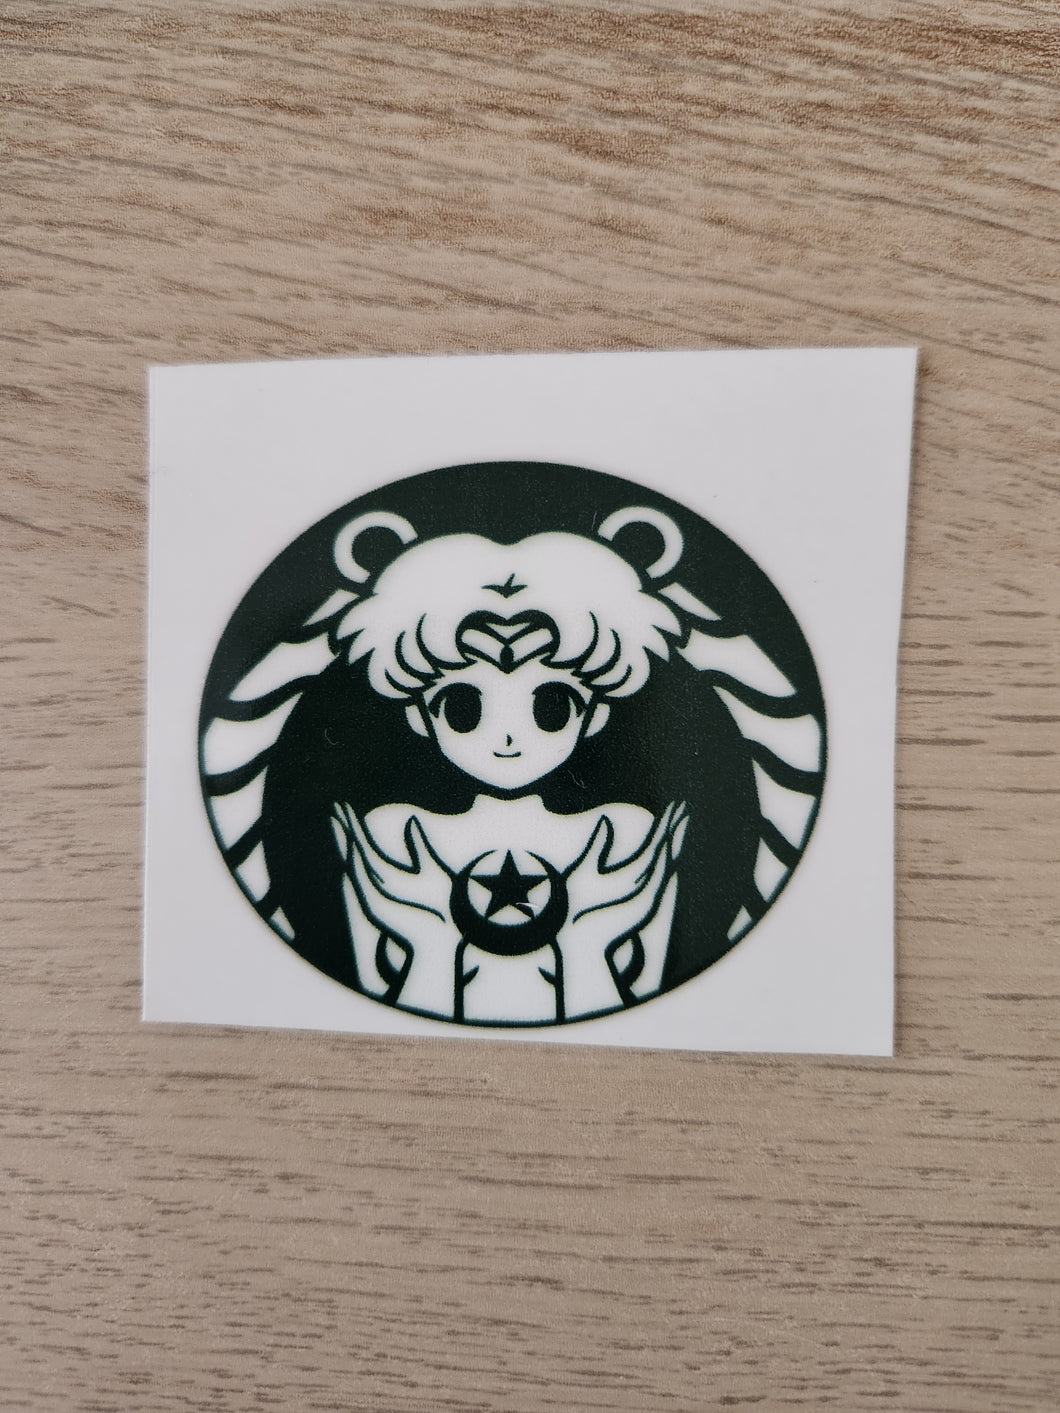 Sailor coffee decal